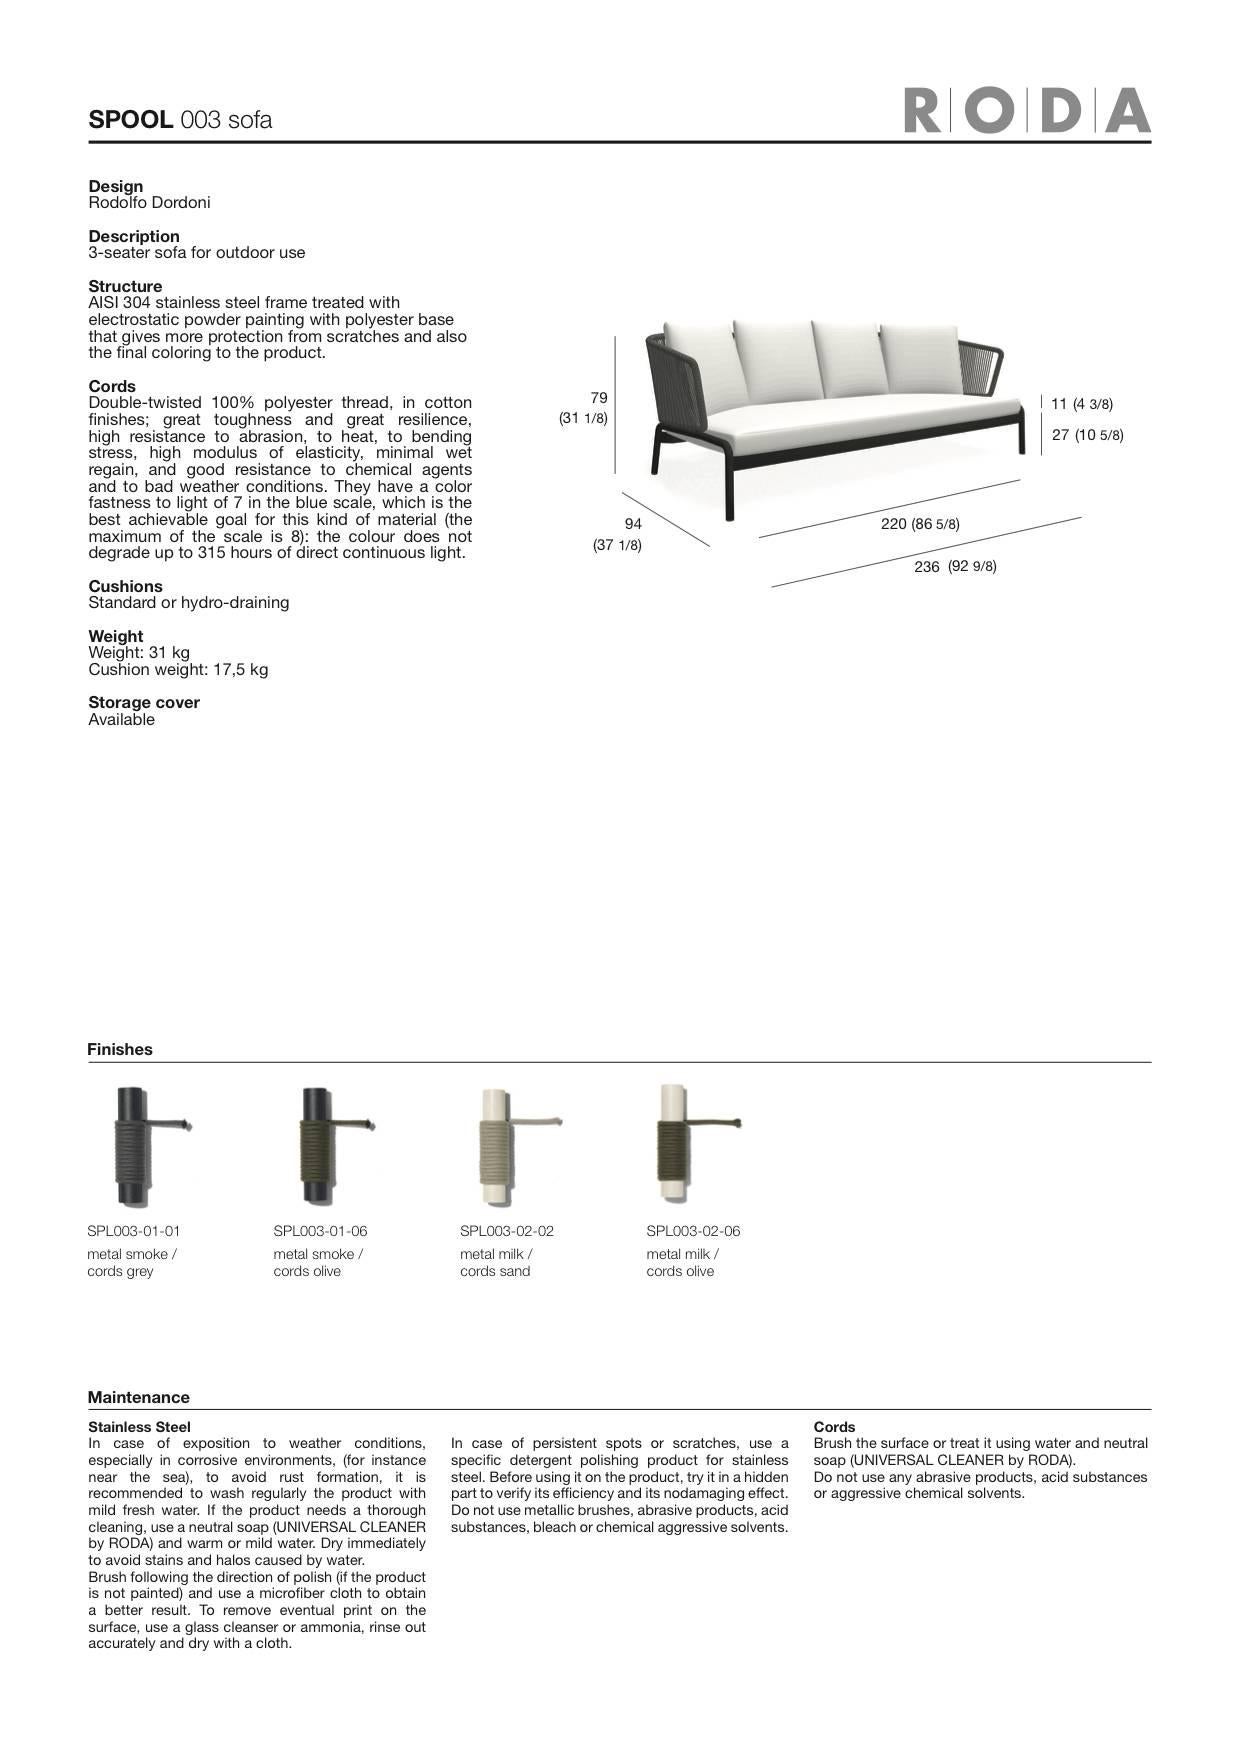 Contemporary RODA Spool three-Seat Sofa for Outdoor/Indoor Use by Rodolfo Dordoni For Sale